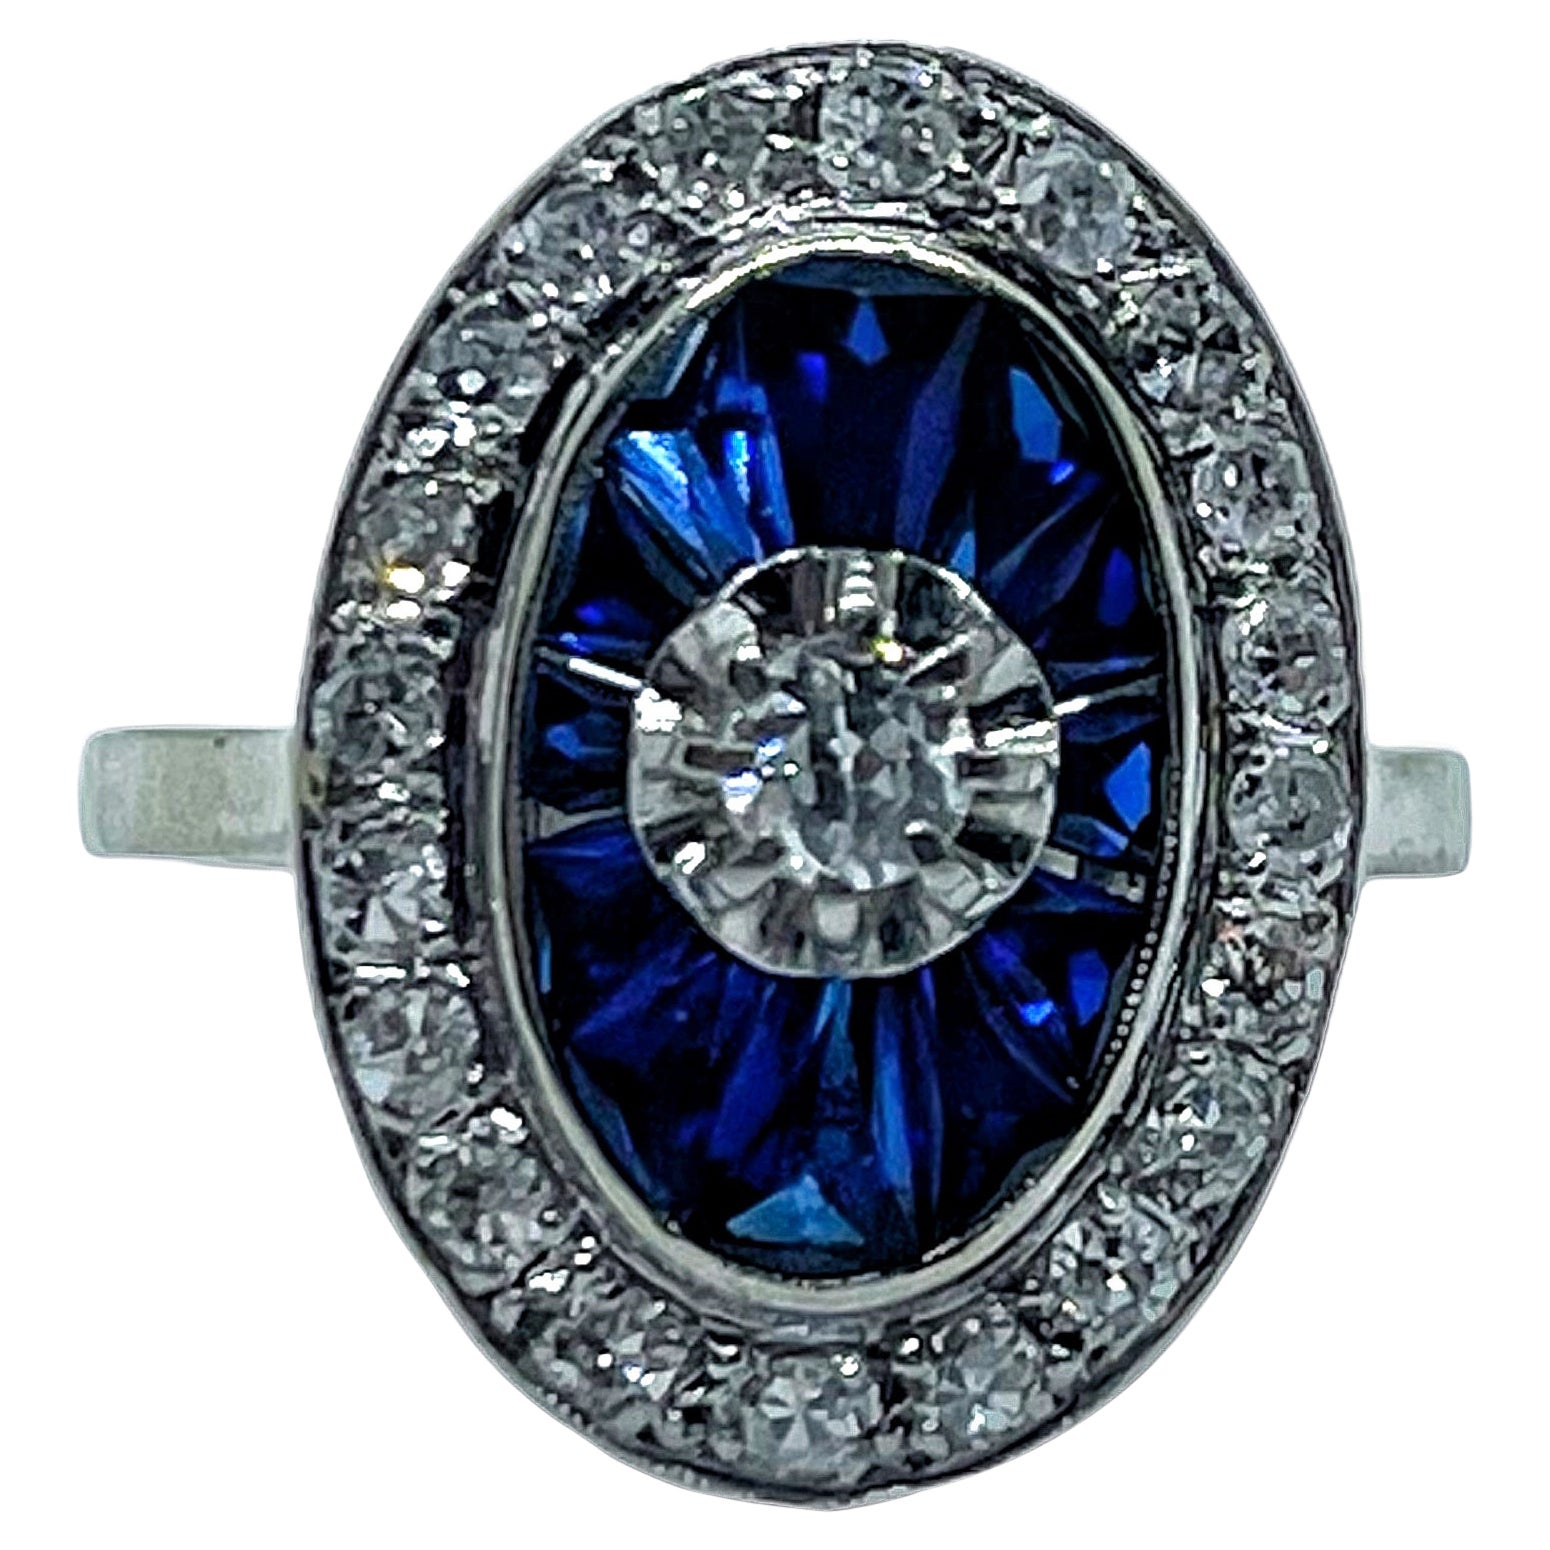 Art Deco Diamond Ceylon Sapphires Ring White Gold 18 Karat